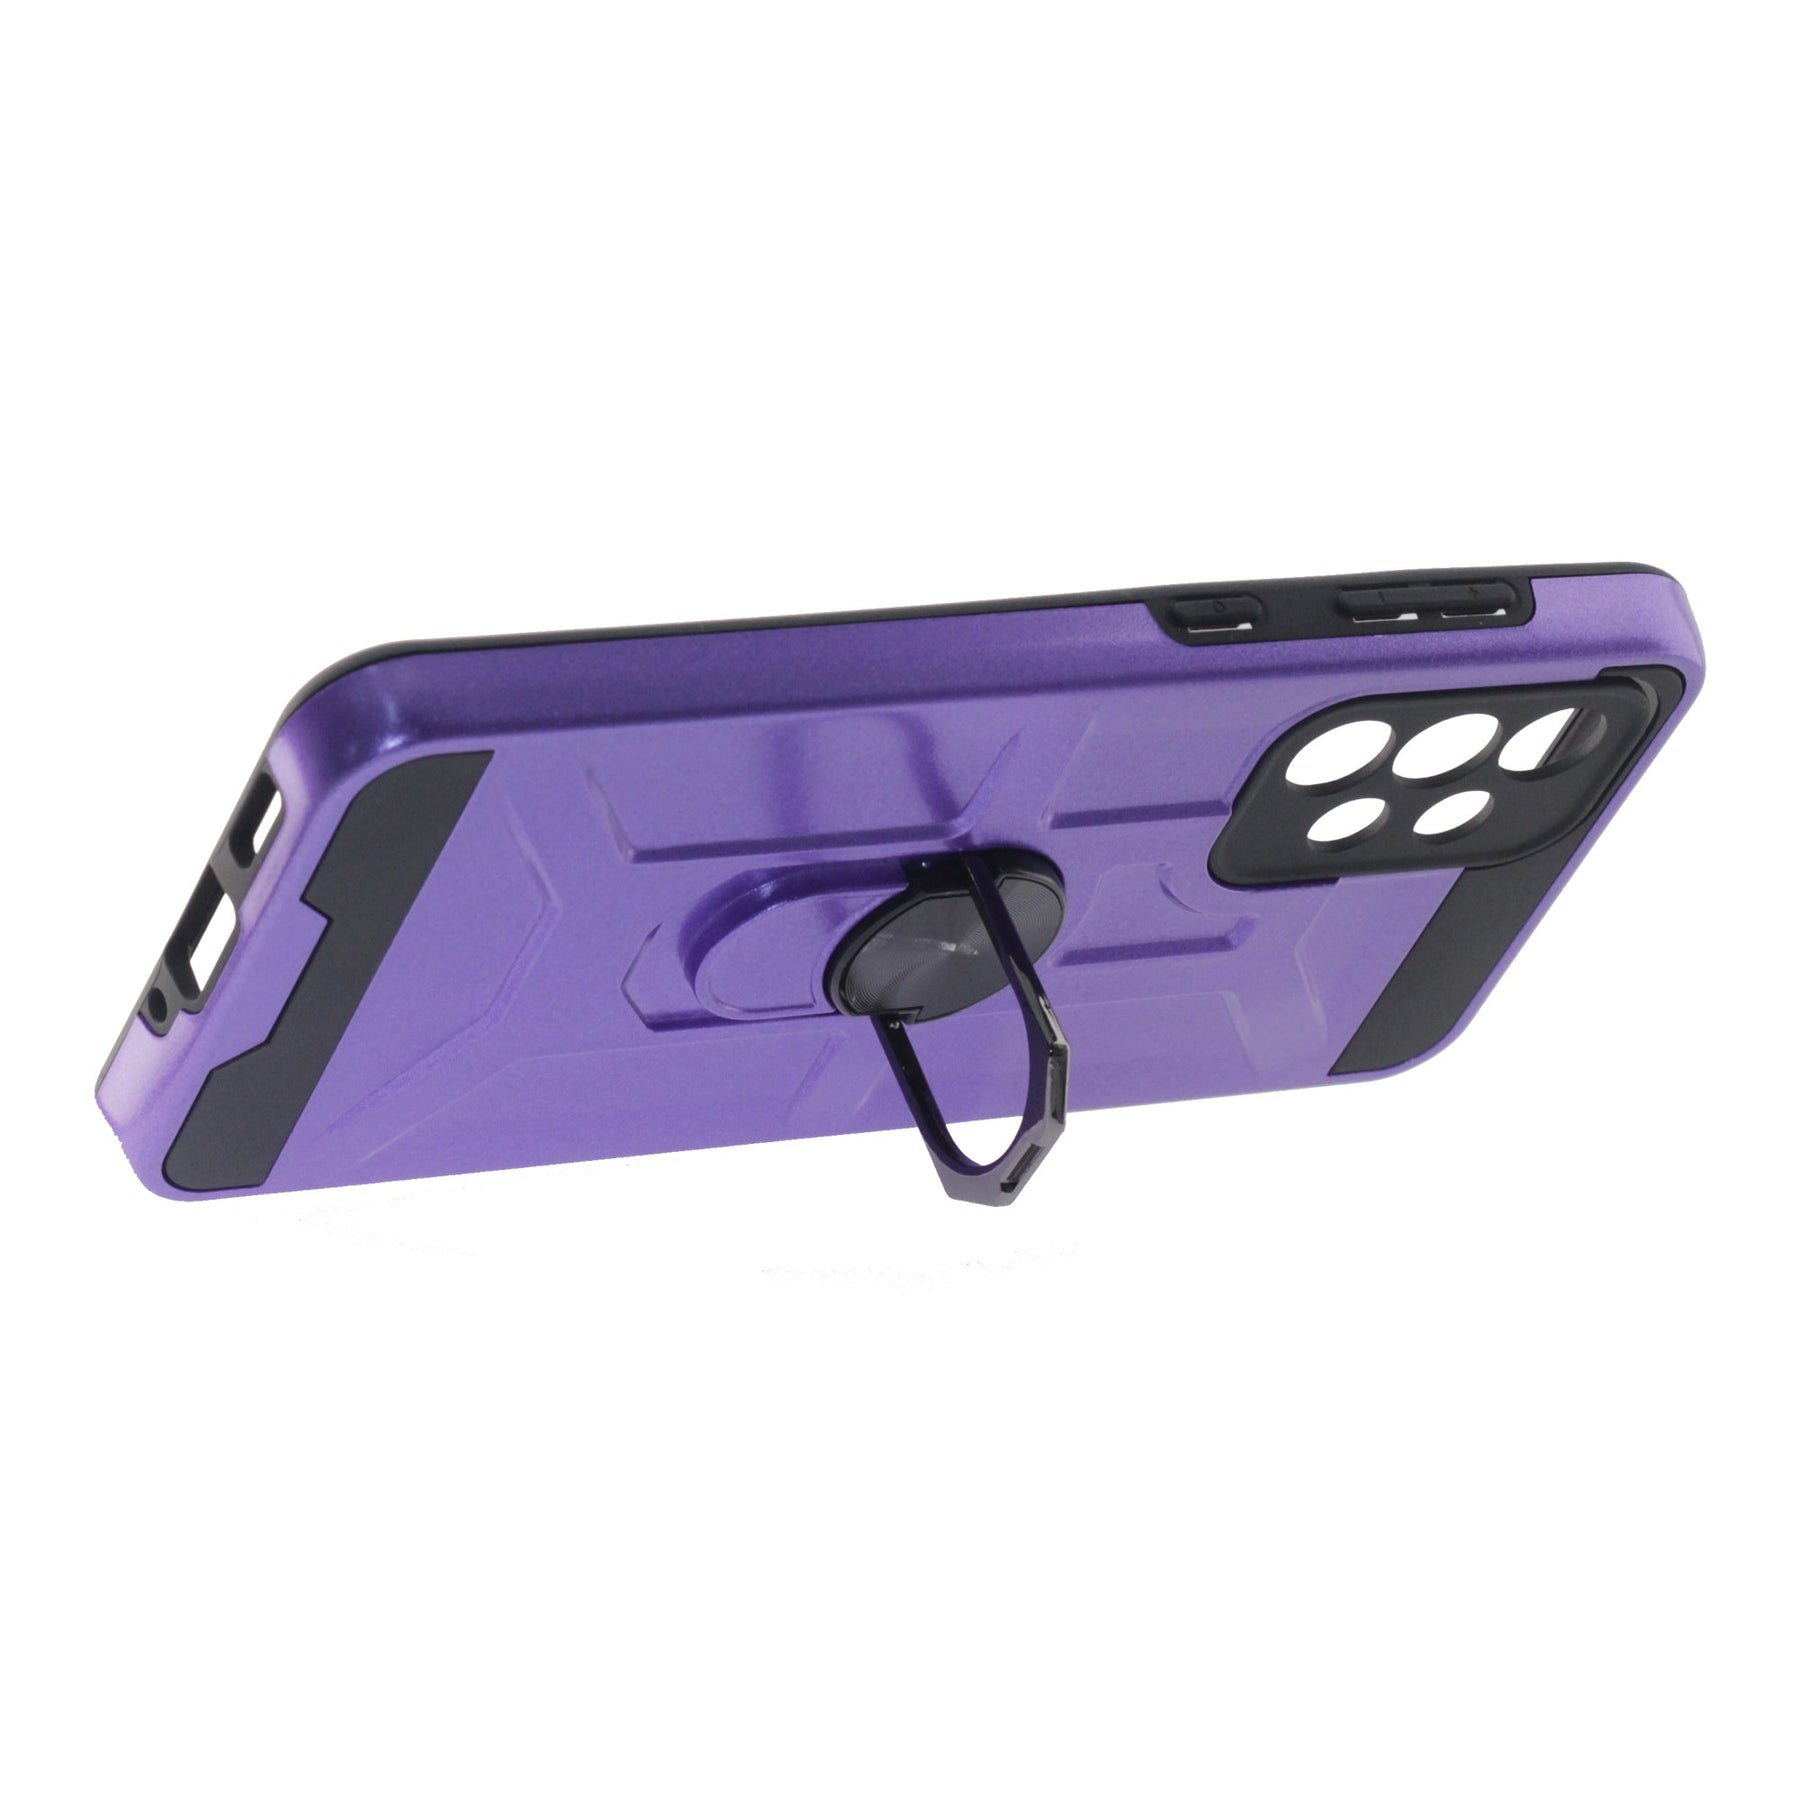 Samsung A53 5G, Ring Armor Case, Color Purple.